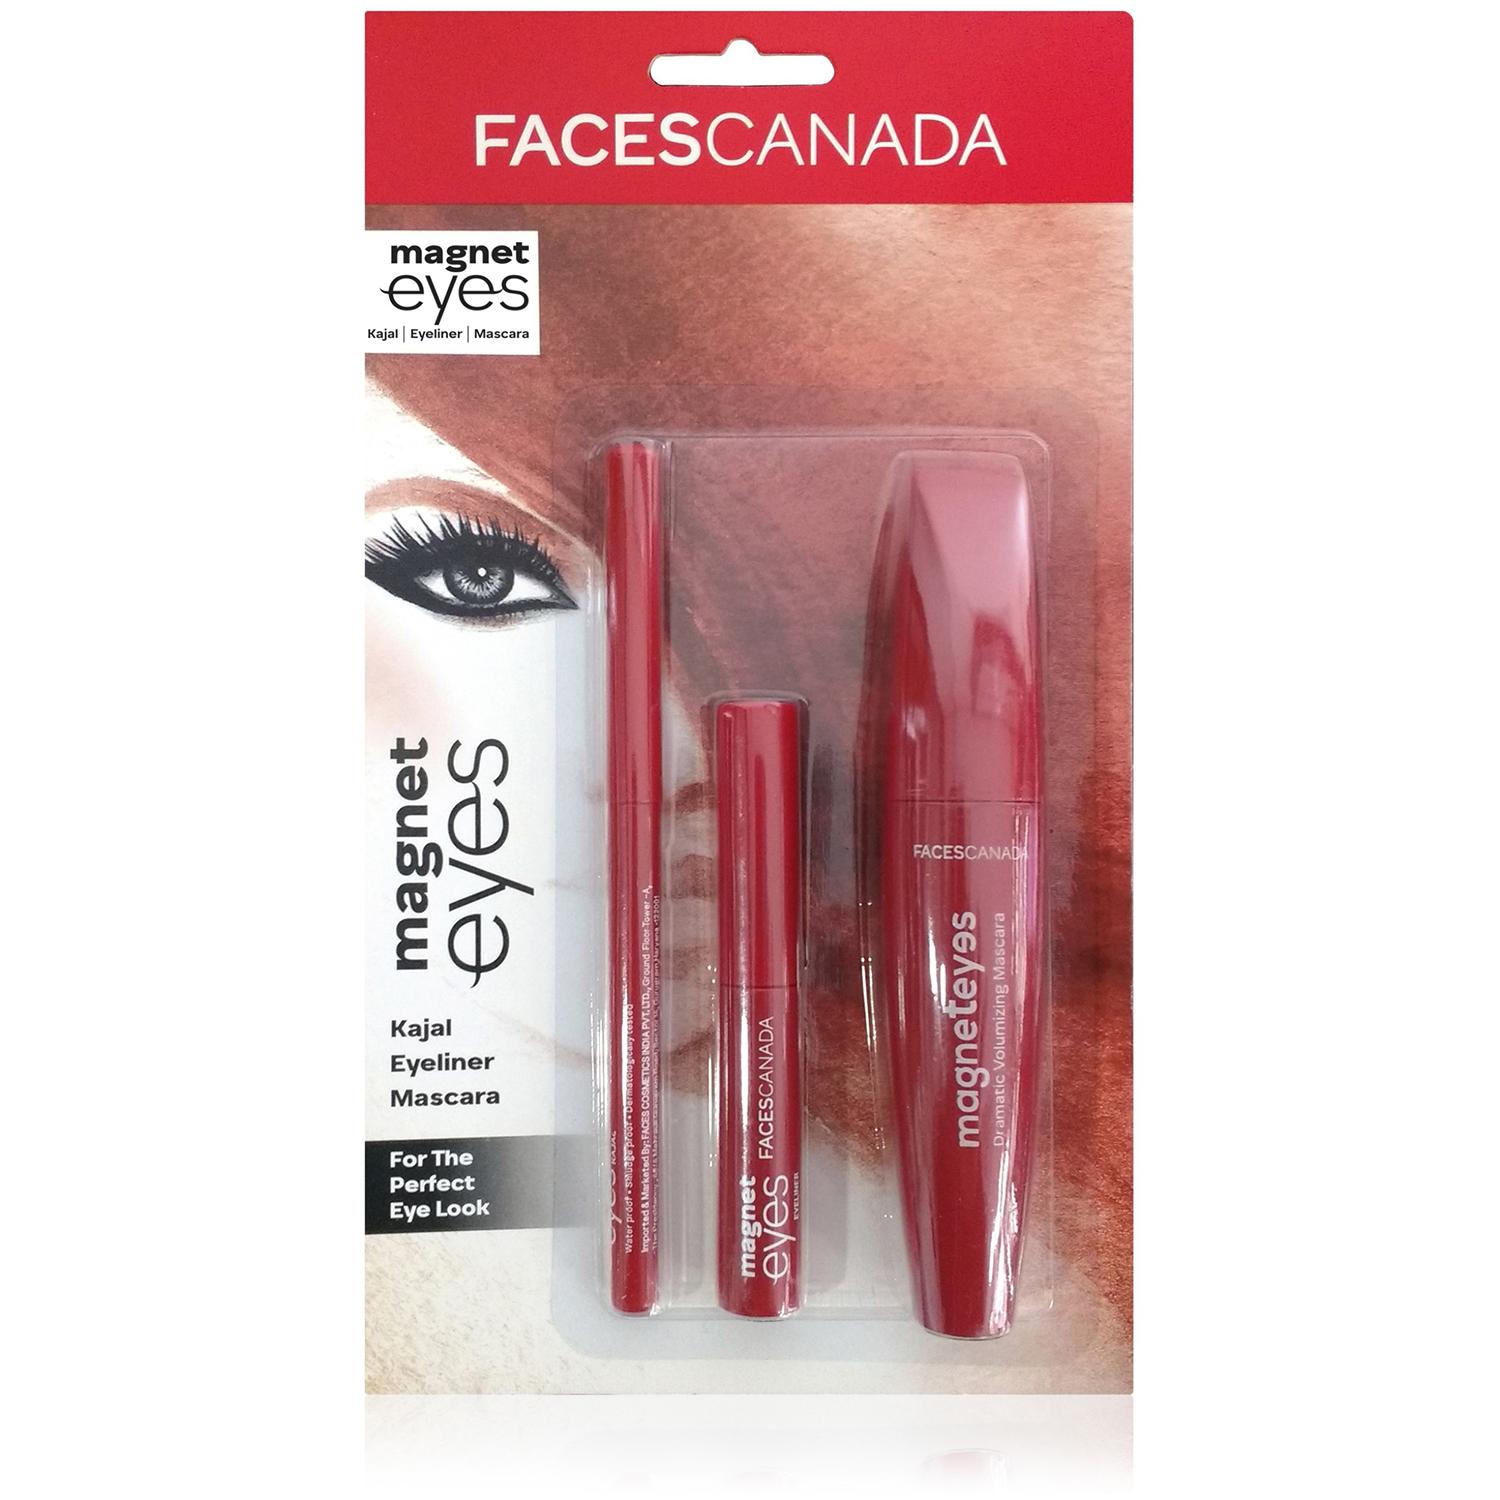 Faces Canada | Faces Canada Magneteyes Range Trio Pack - Black, 13.35 g, Kajal + Eyeliner + Mascara